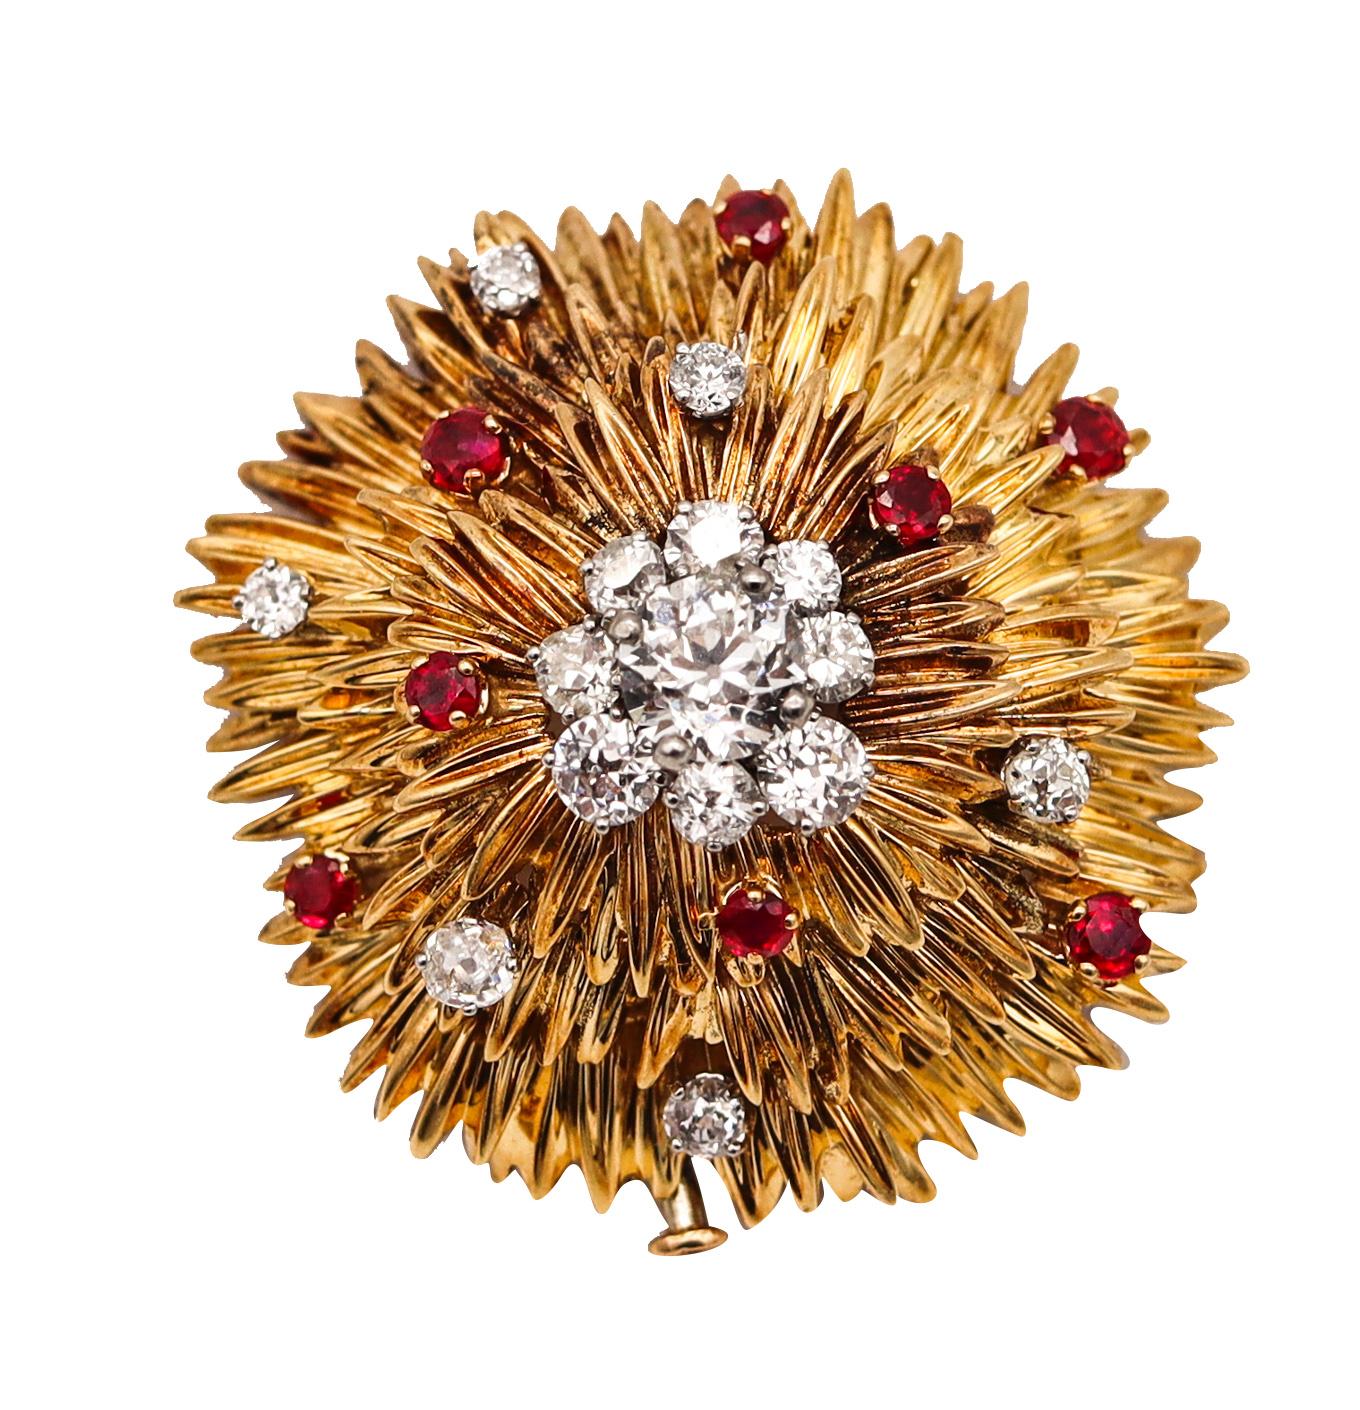 Van Cleef & Arpels Broche Paris en or 18 carats avec diamants et rubis de 4,64 carats, 1960